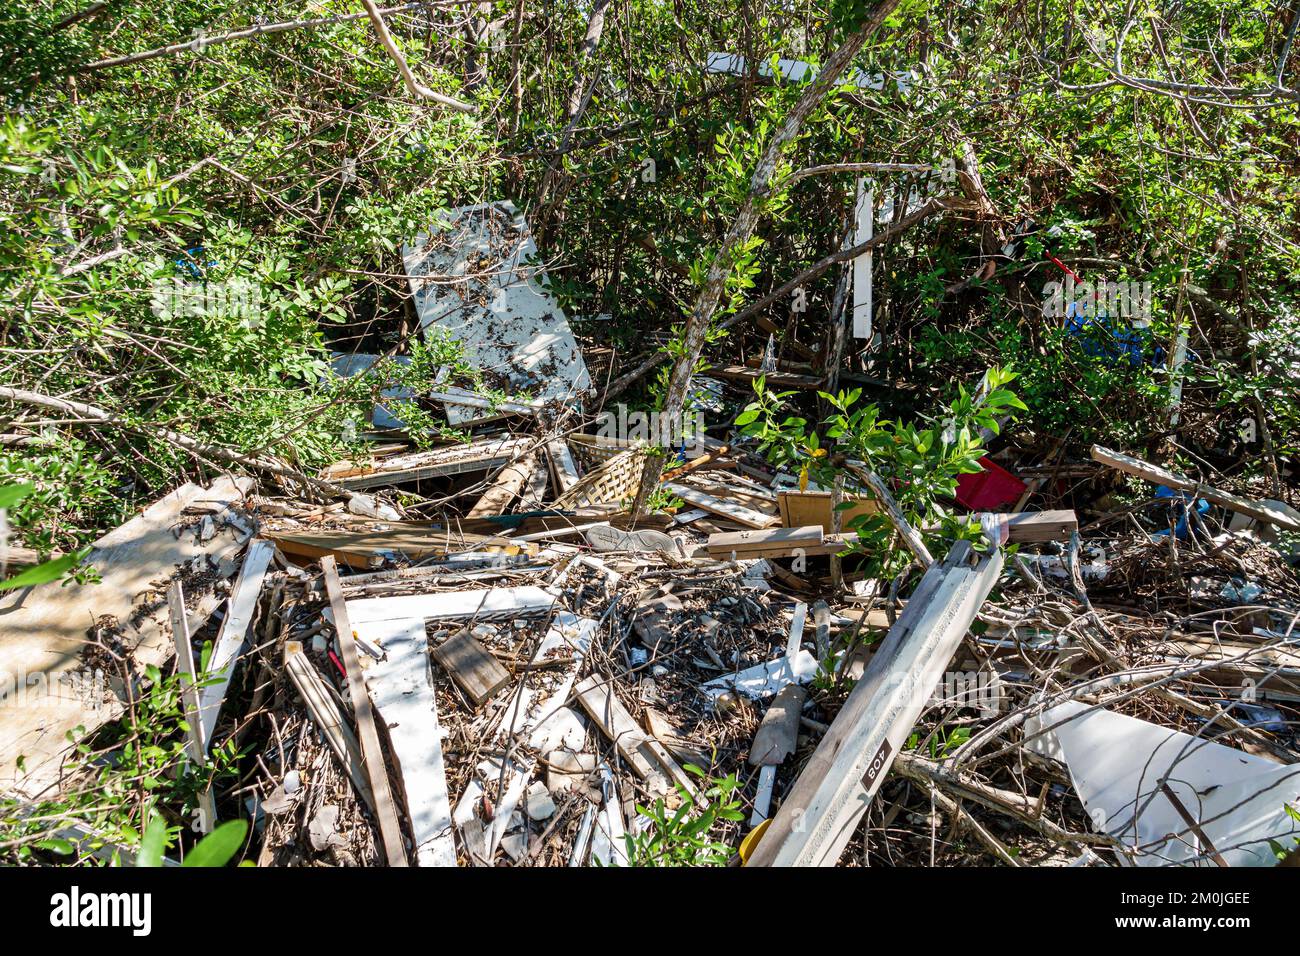 Bonita Springs Bonita Beach Broadway Channel Bay's Island,Hurricane Ian damage destruction destroyed debris trash litter man-made red mangrove trees Stock Photo